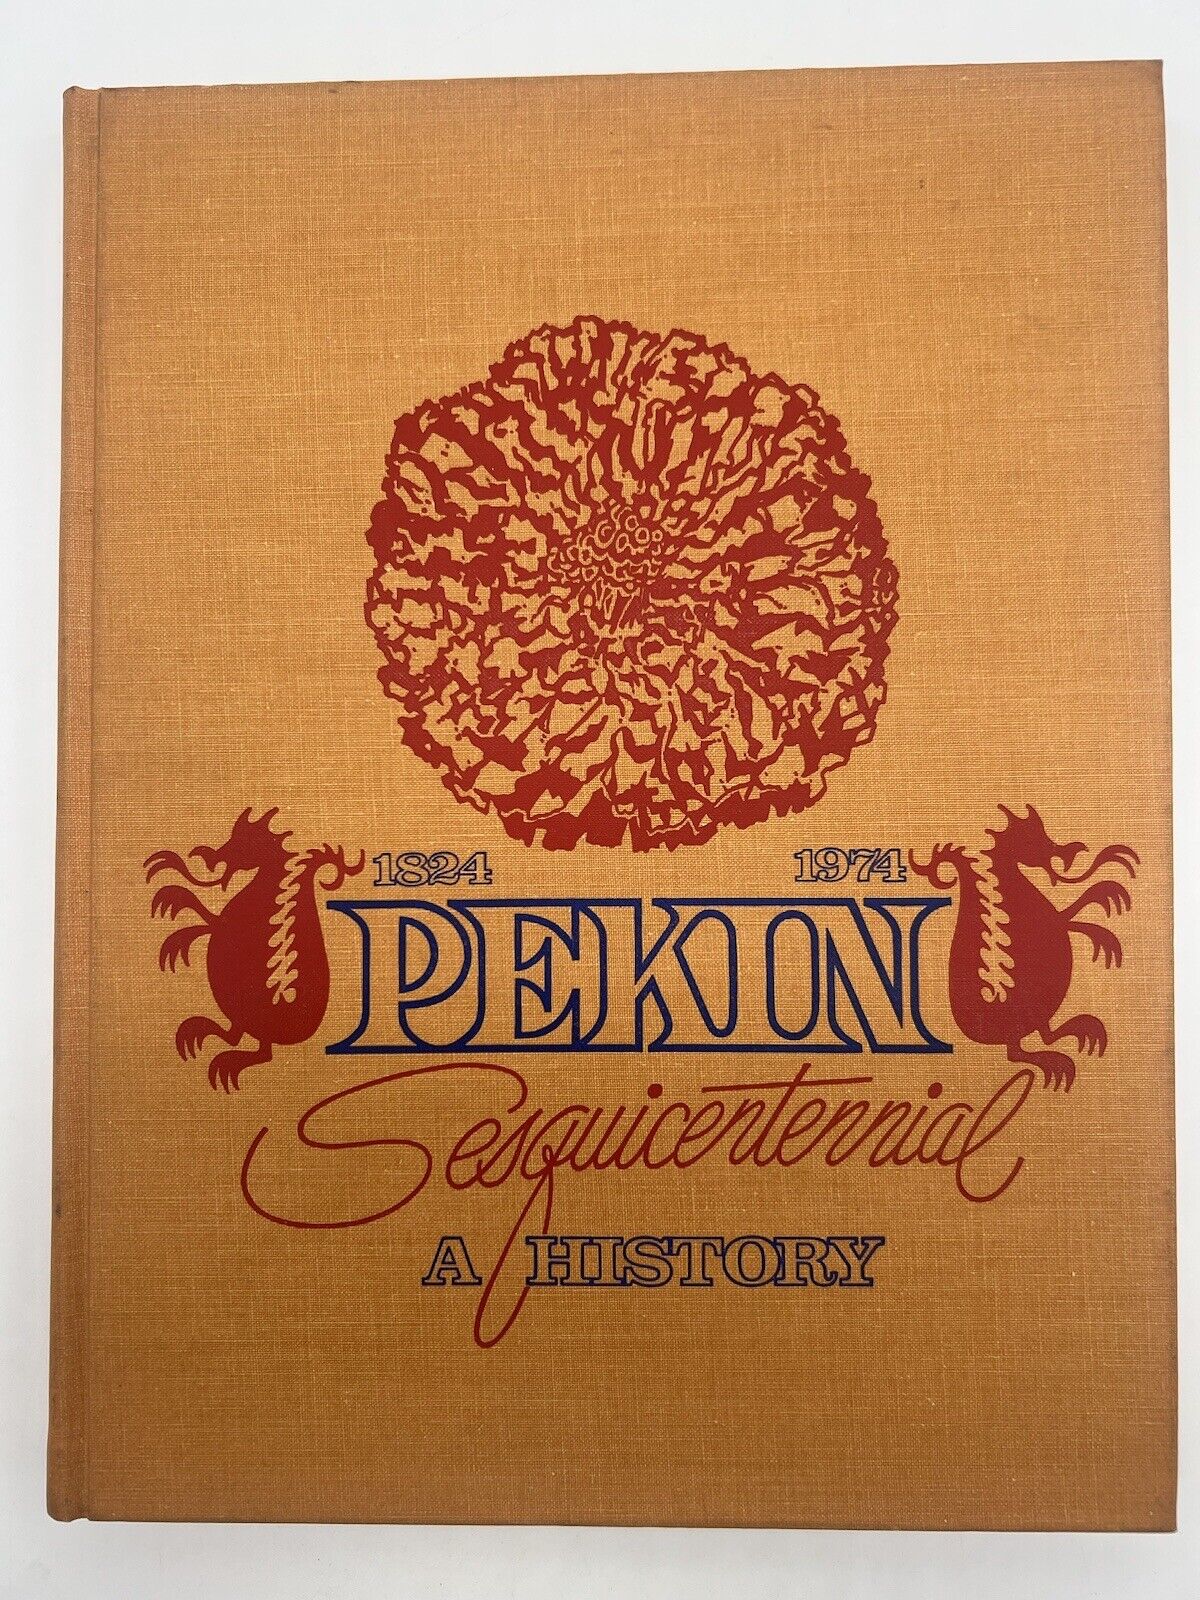 Pekin Illinois Sesquicentennial Yearbook 1824-1974 Tazewell County Photo History